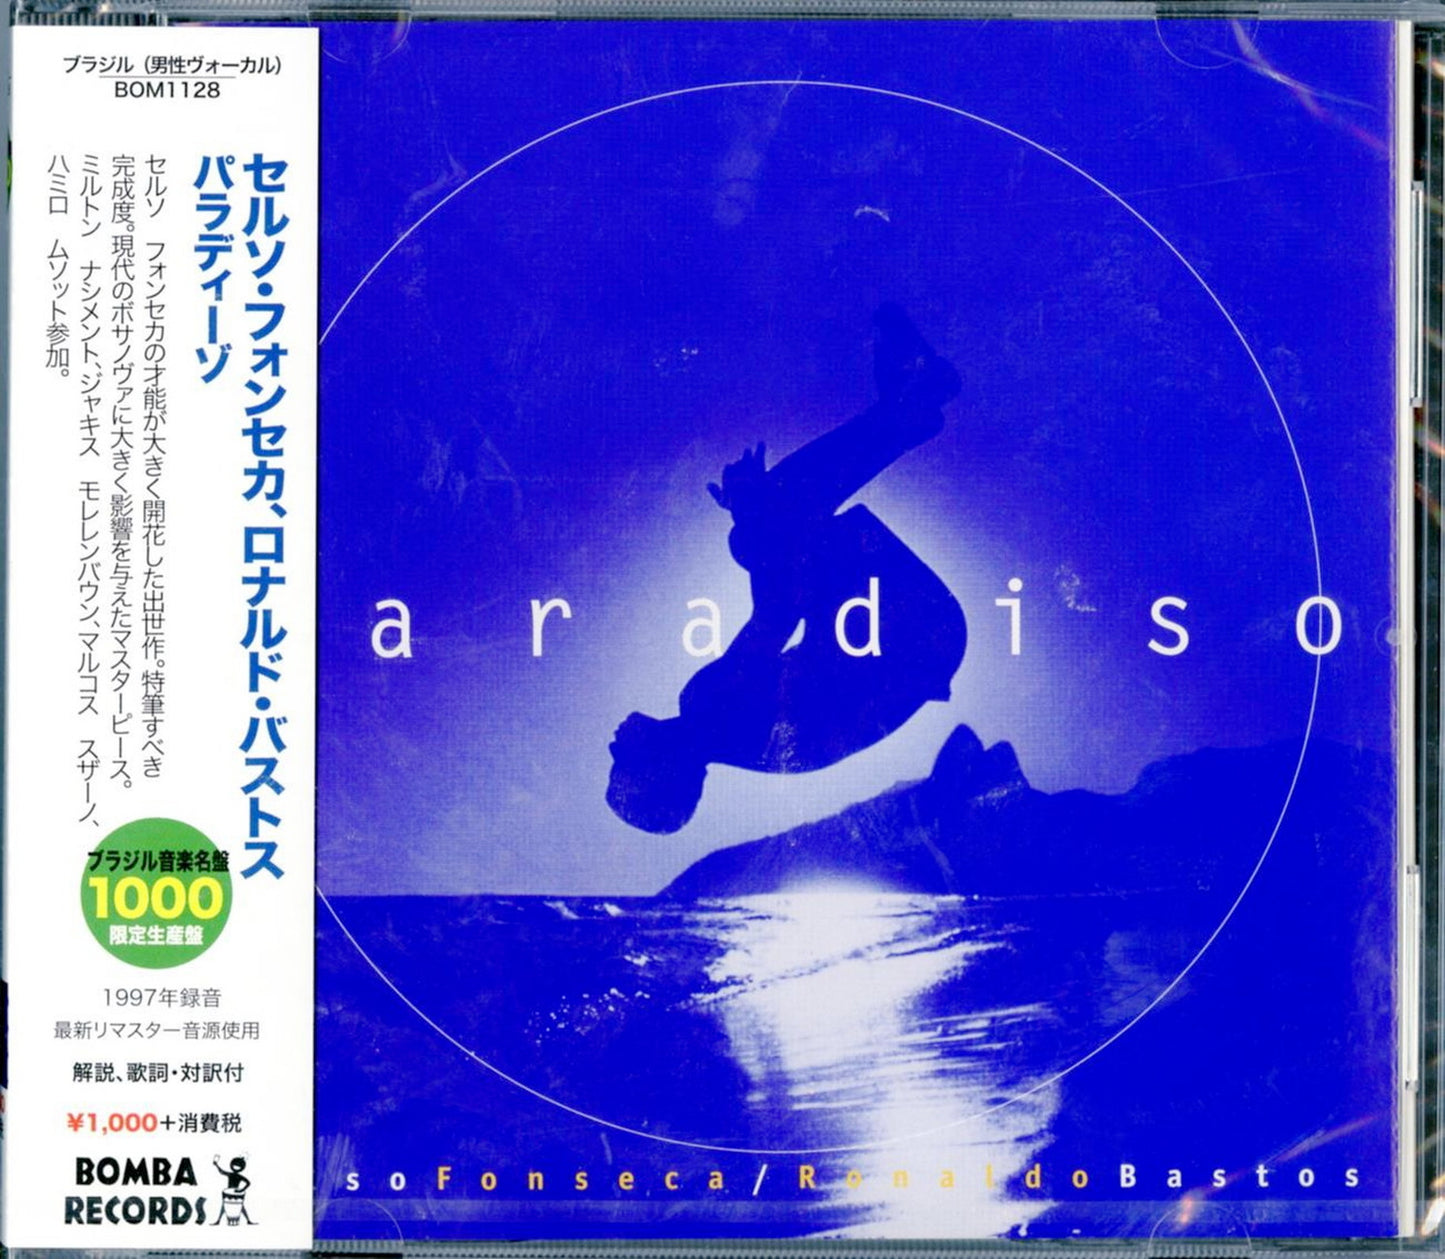 Celso Fonseca & Ronaldo Bastos - Paradiso - Japan  CD Limited Edition